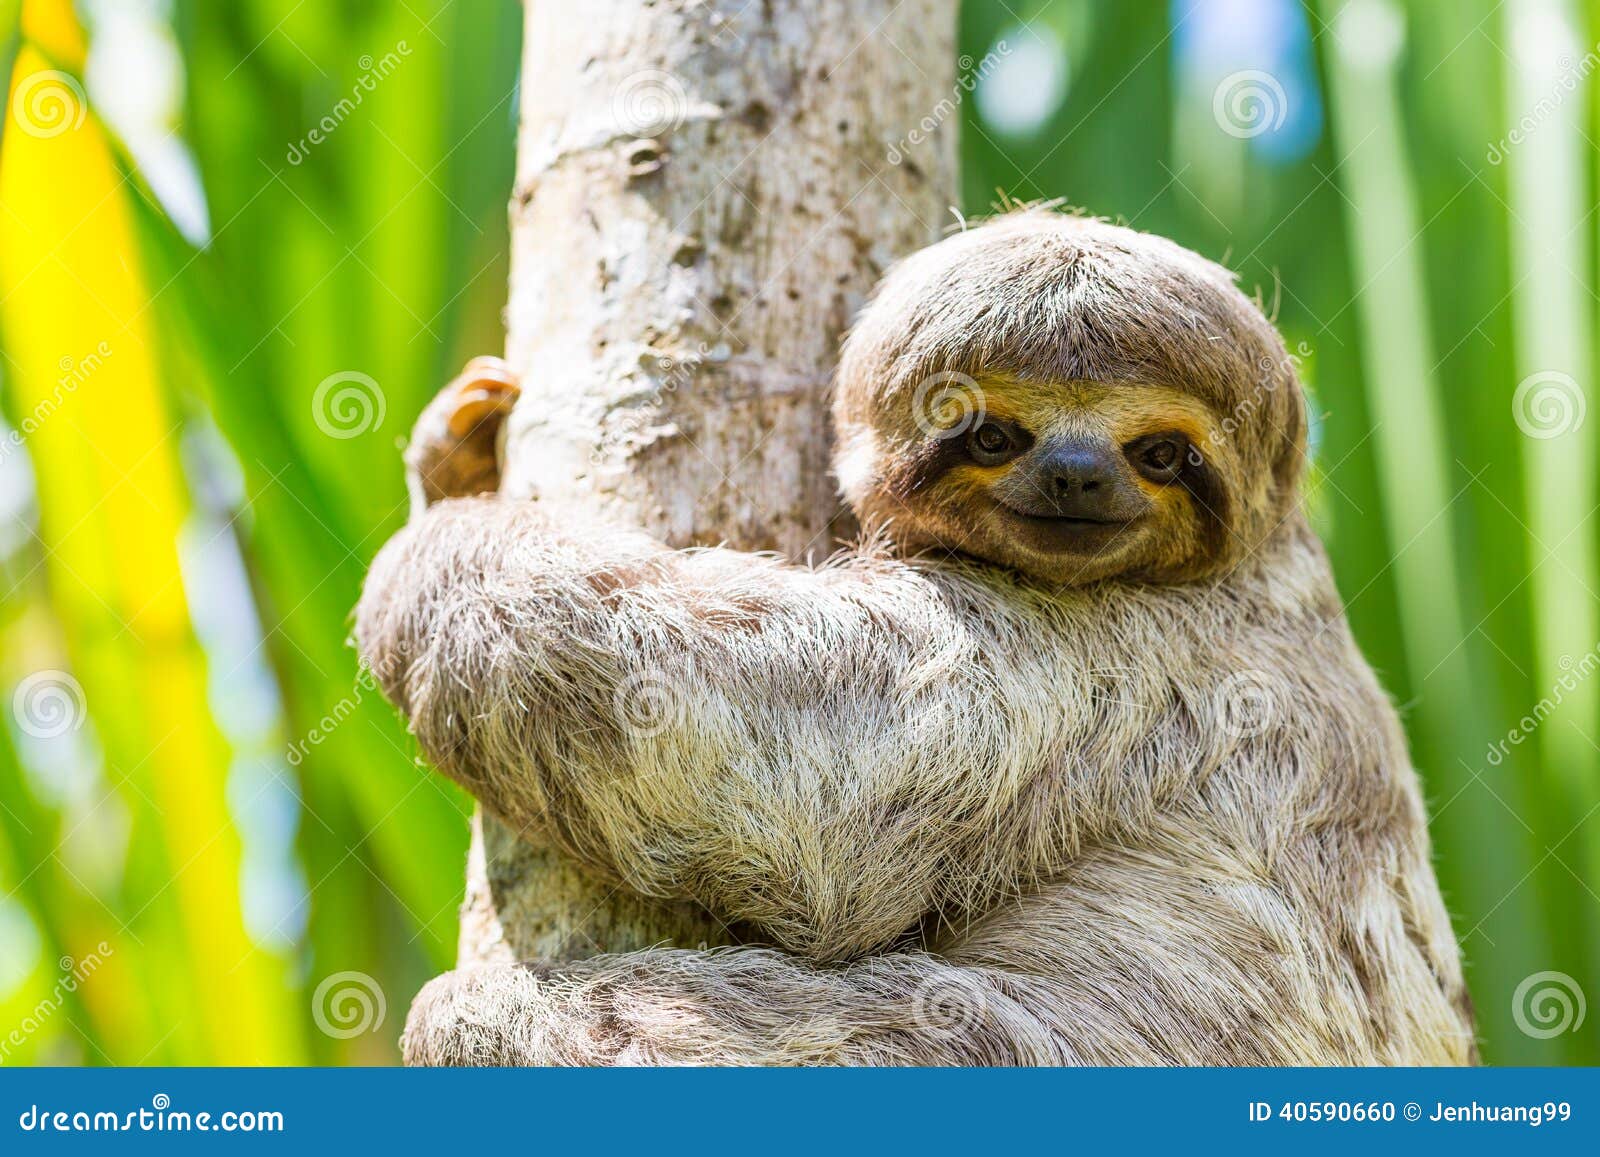 Young 3 Toed Sloth in Its Natural Habitat. Amazon River, Peru Stock Photo -  Image of amazon, mammal: 40590660